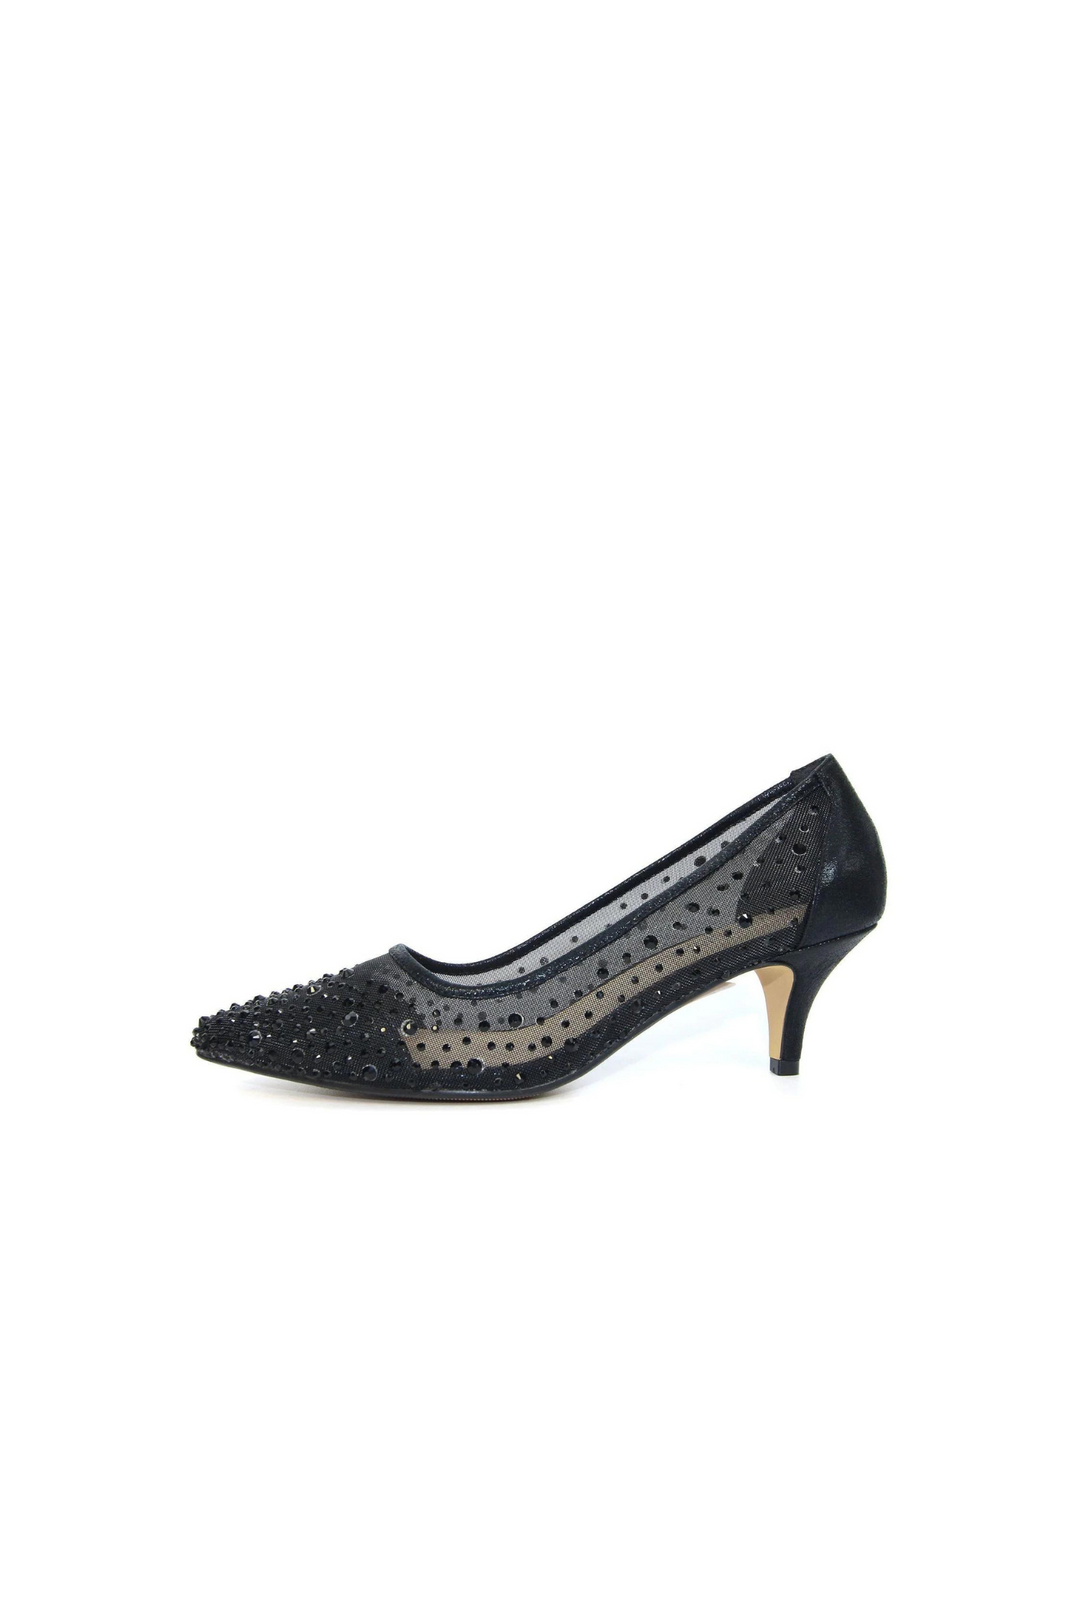 Lunar FLR559 Alisha Black Gemstone Kitten Heel Shoes